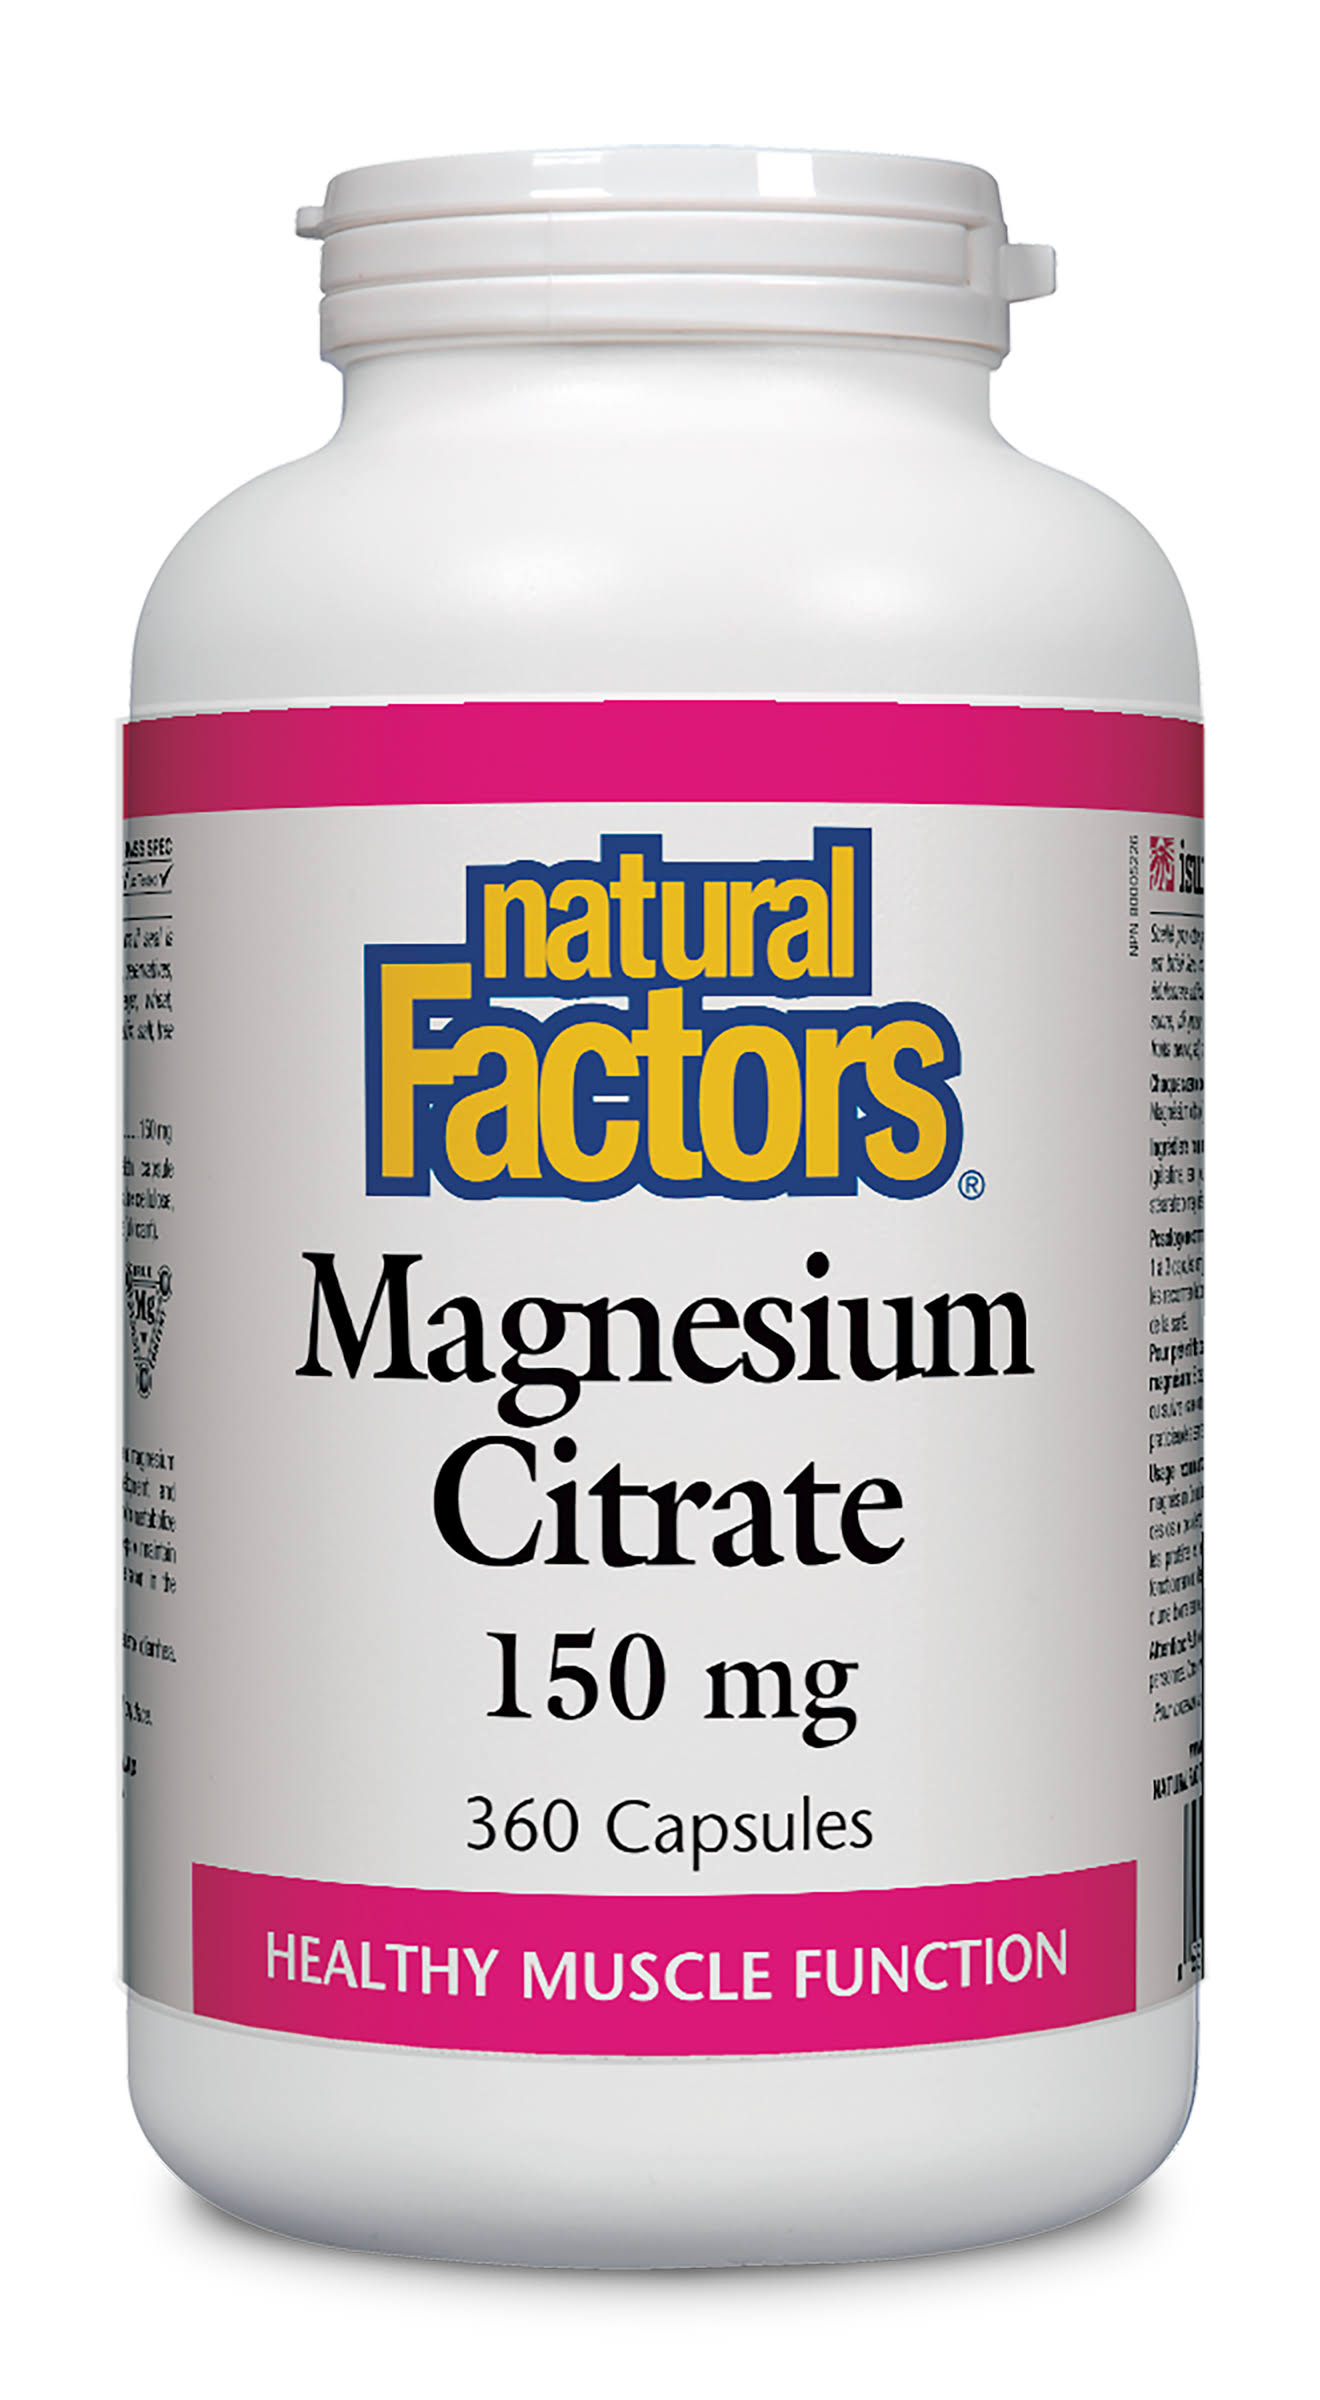 Natural Factors Magnesium Citrate Supplement - 150mg, 360 Capsules